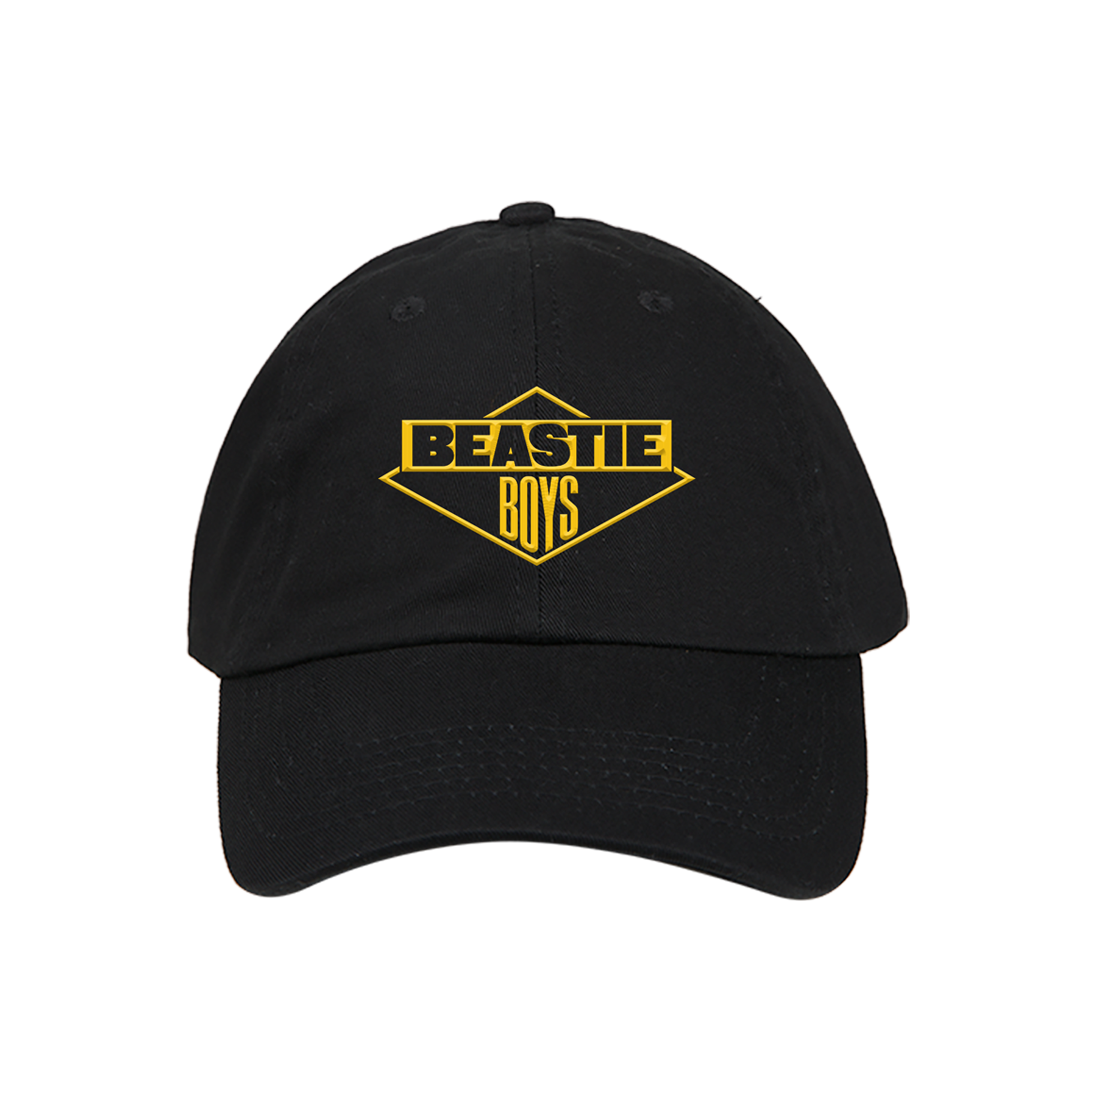 Beastie Boys - Gold Logo Cap